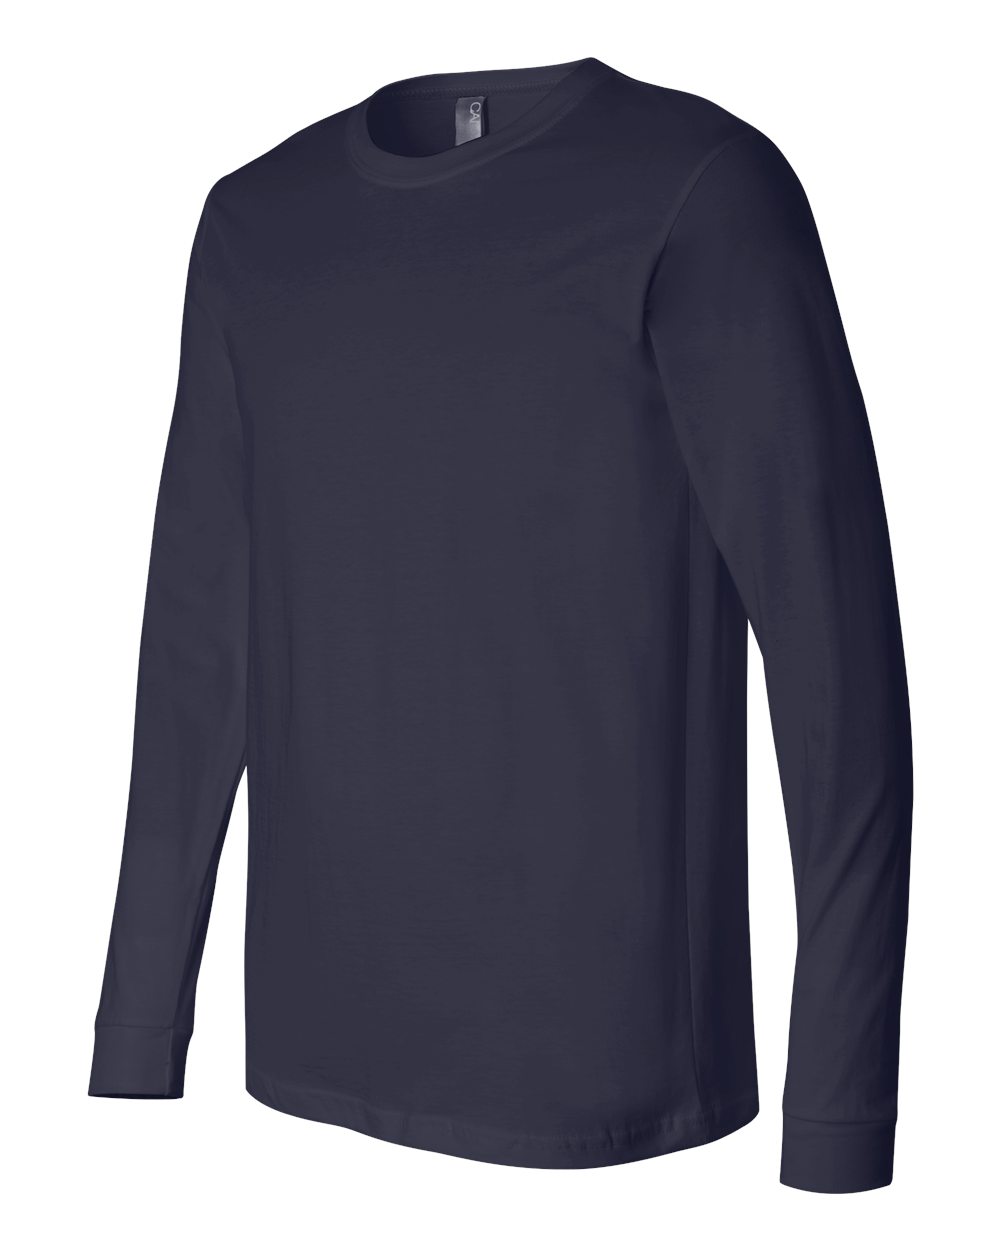 Bella + Canvas 3501 - Unisex Jersey Long-Sleeve Tee $9.78 - T-Shirts